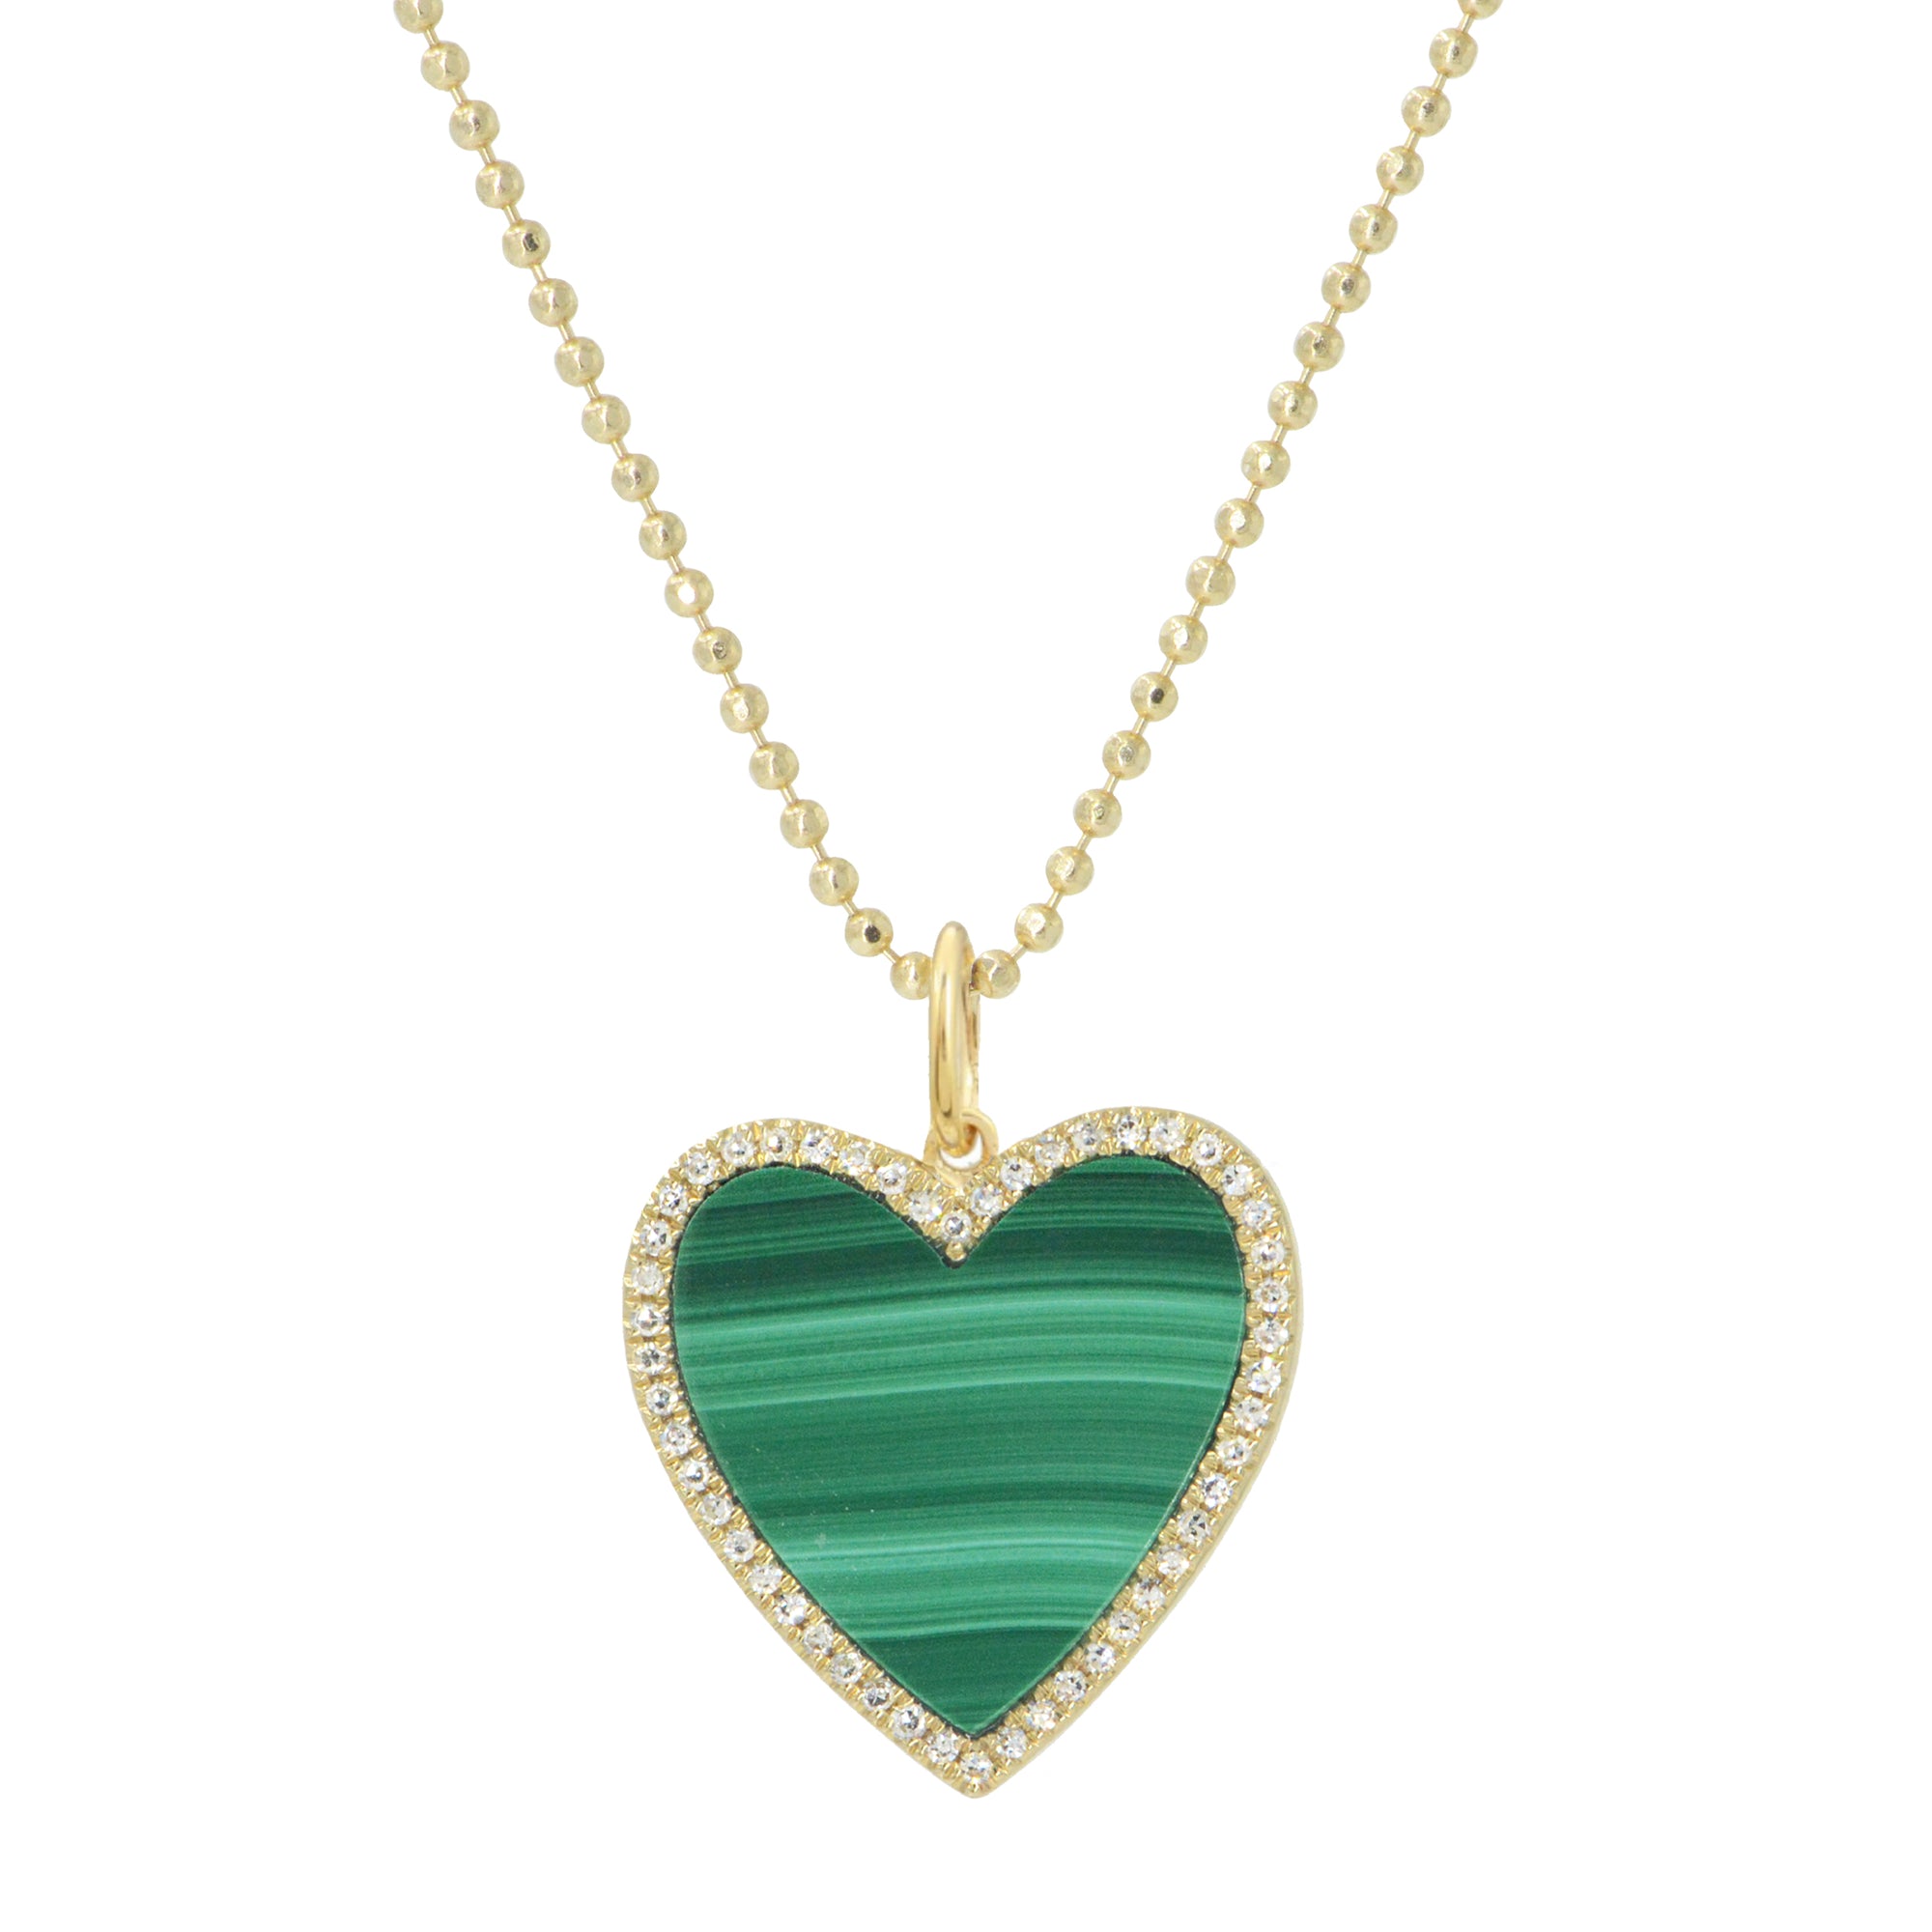 Malachite Heart Necklace With Diamonds - Large